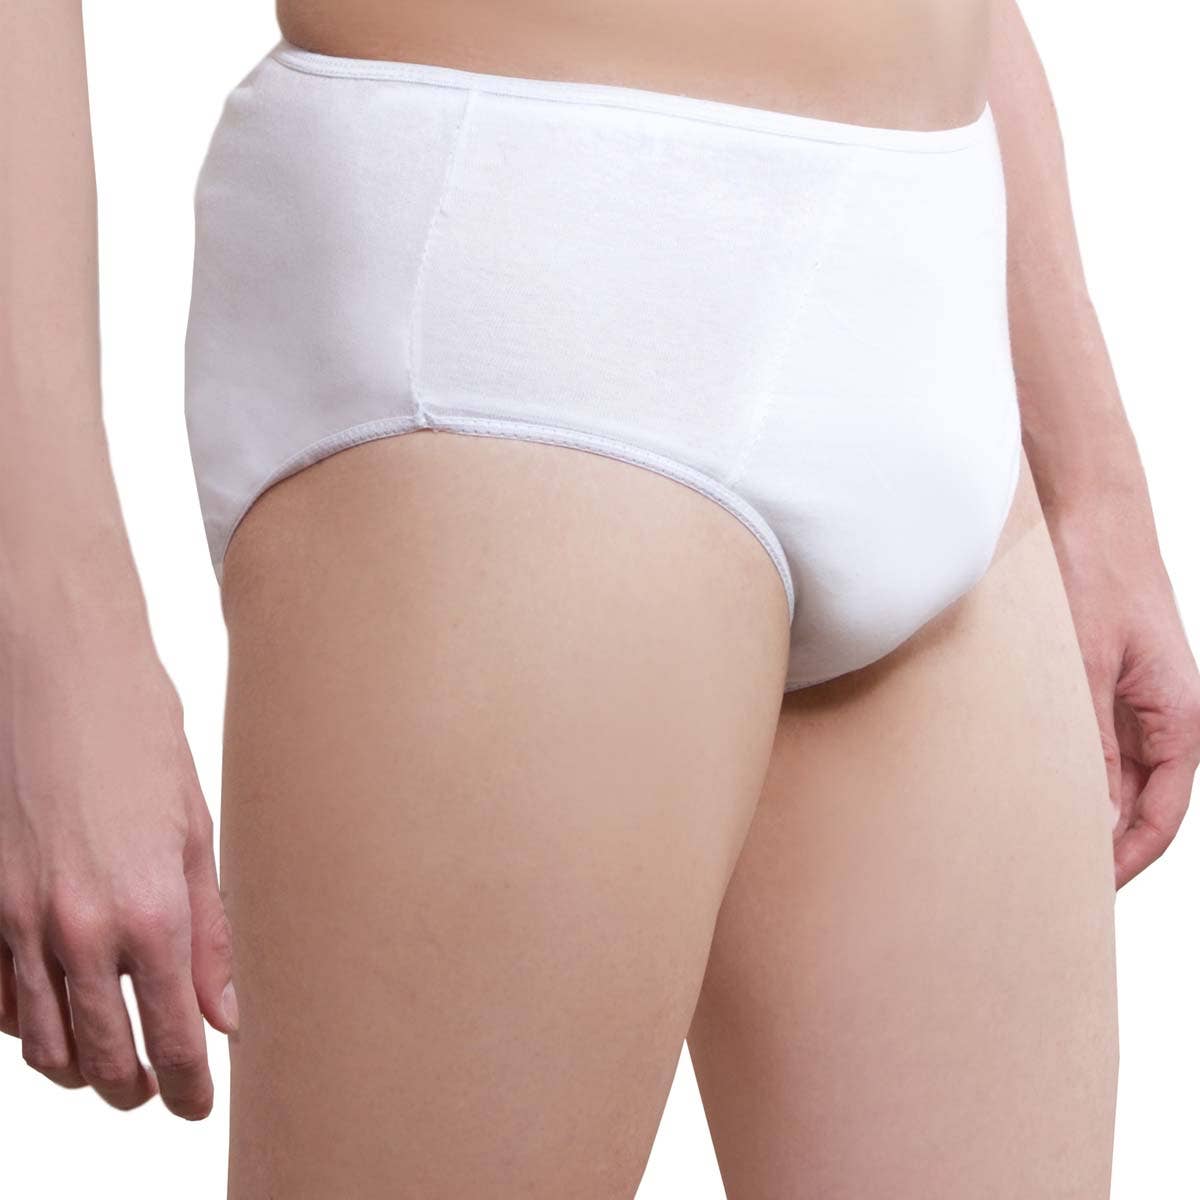 On Sale- One-Wear Disposable white cotton underwear for men